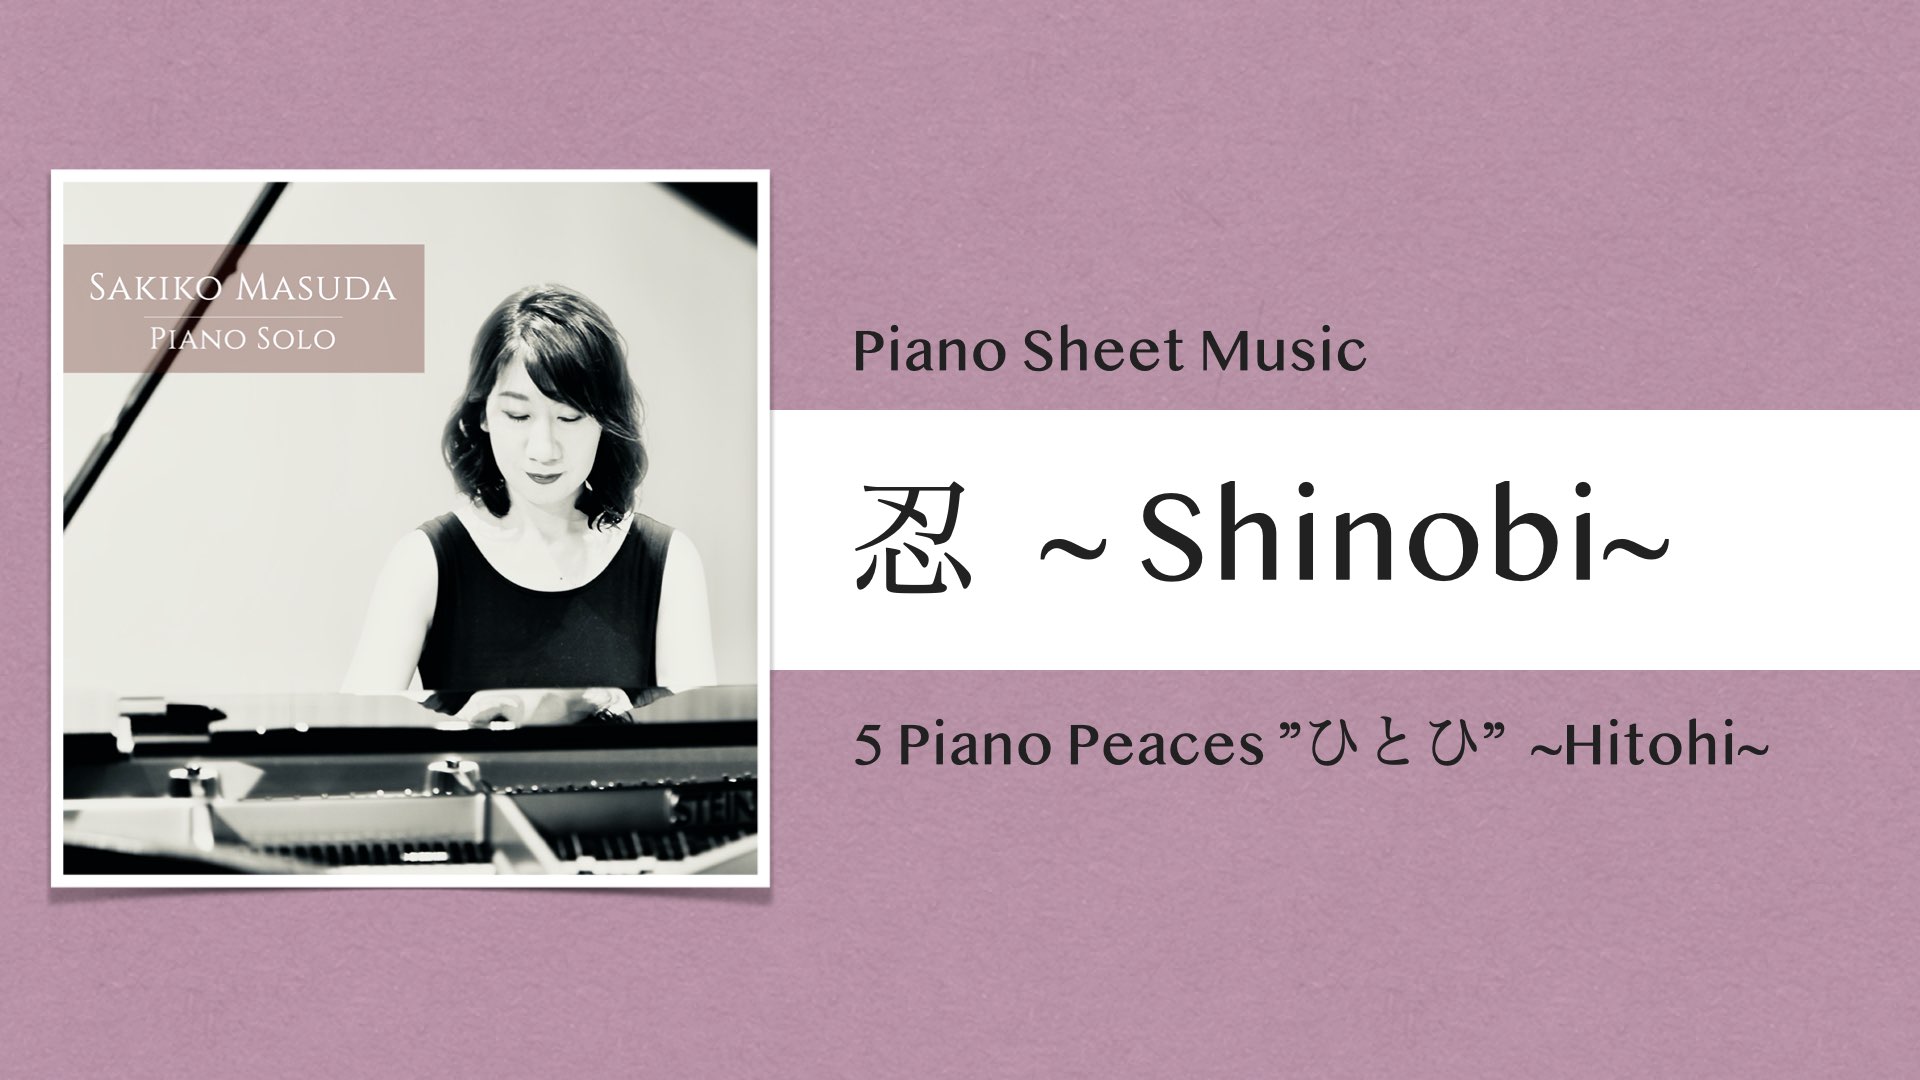 Shinobi from 5 Piano Peaces "Hitohi"【Piano Sheet Music】